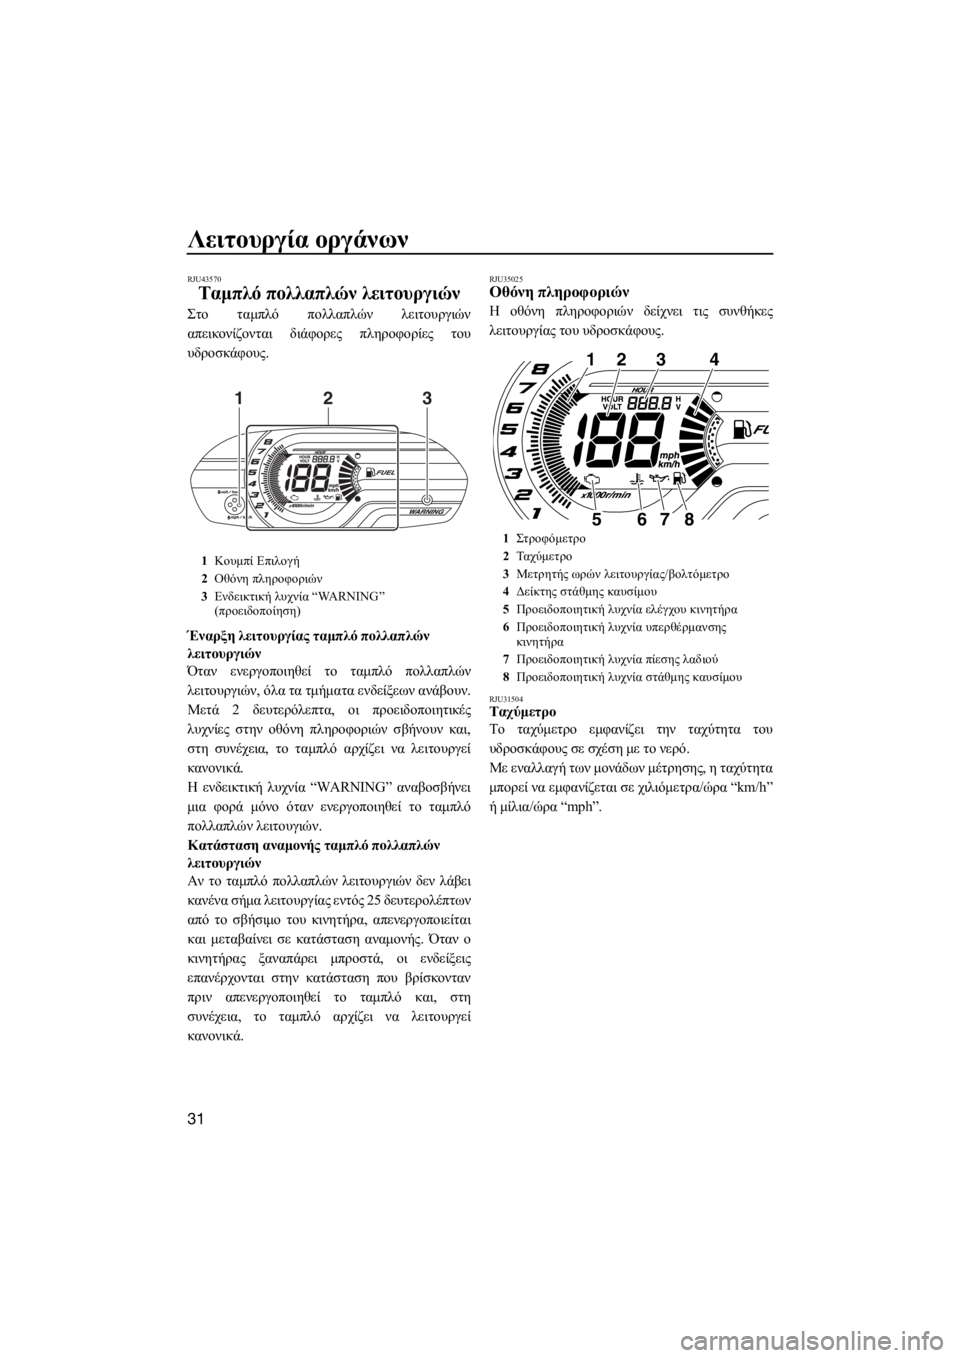 YAMAHA V1 SPORT 2015  ΟΔΗΓΌΣ ΧΡΉΣΗΣ (in Greek) Λειτουργία οργάνων
31
RJU43570
Ταμπλό πολλαπλών λειτουργιών
Στο ταμπλό πολλαπλών λειτουργιών
απεικονίζονται διά